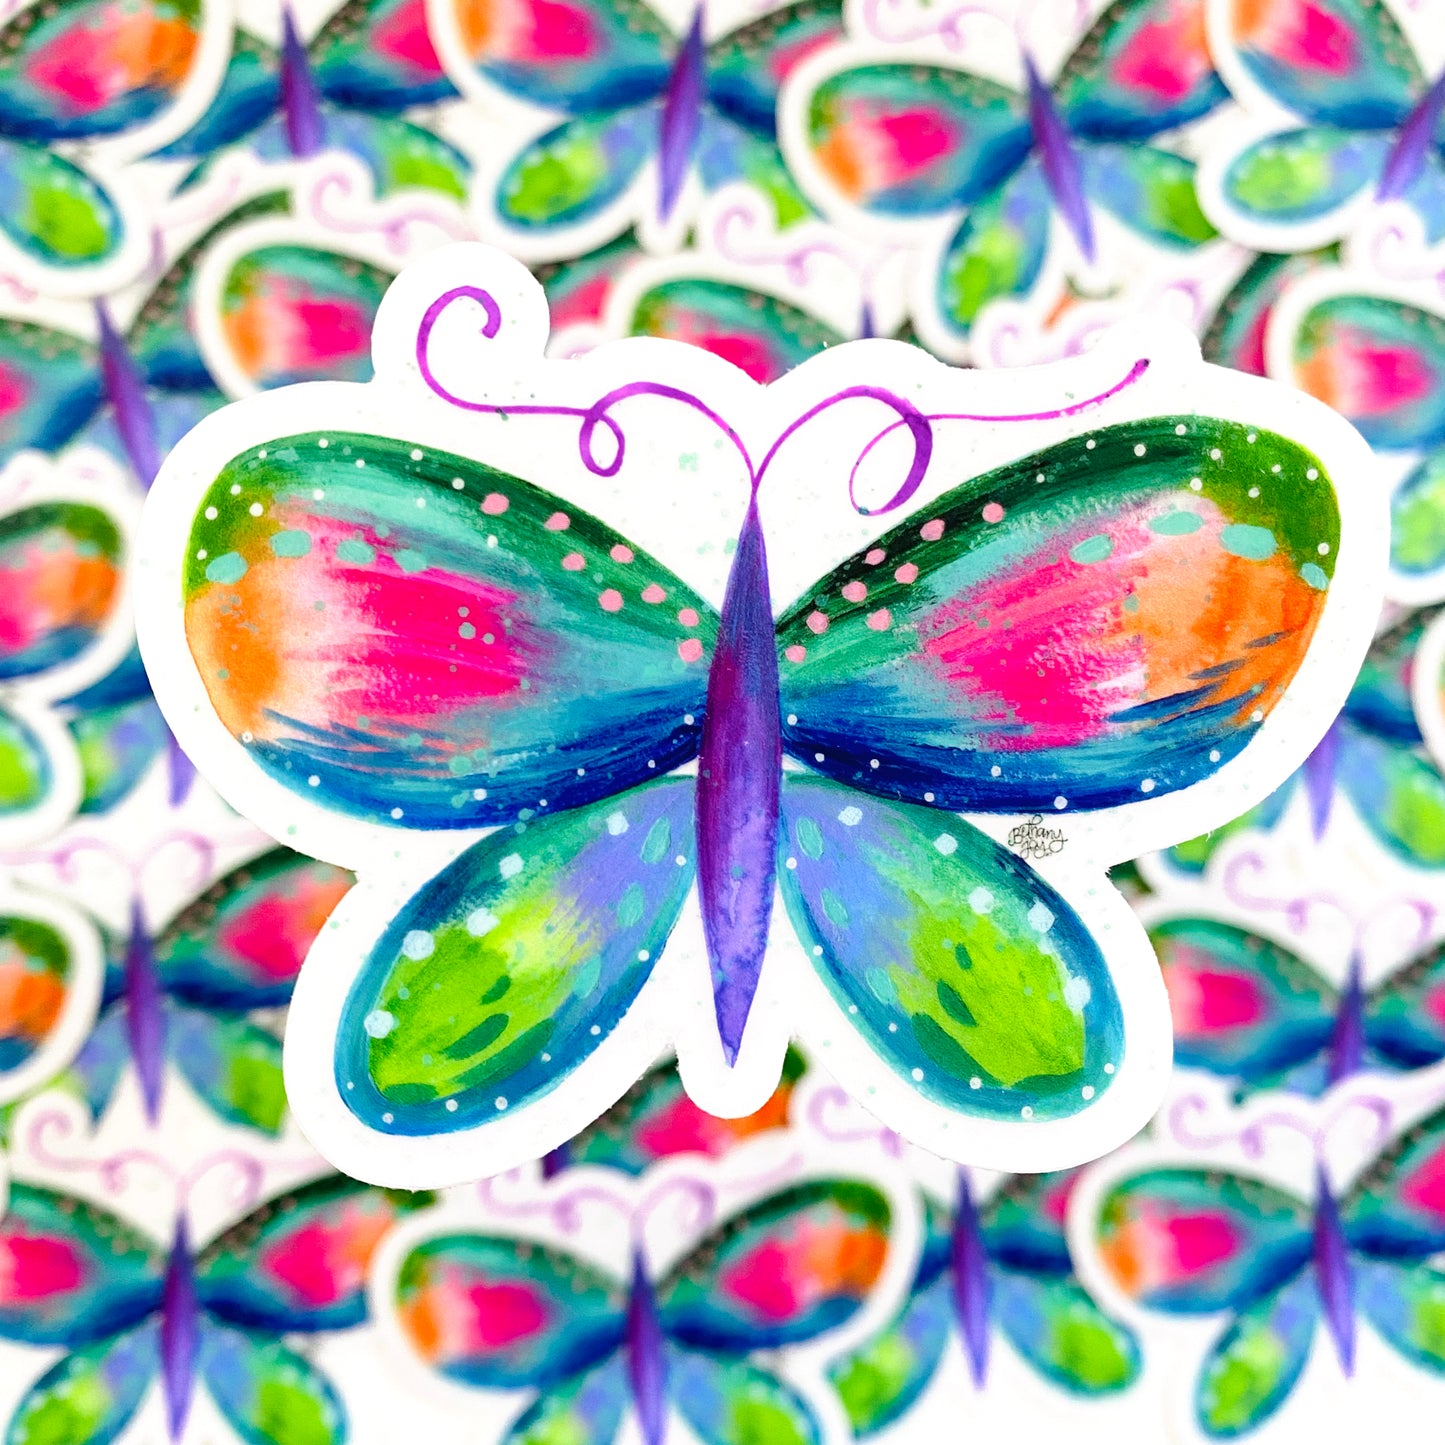 Butterfly Vinyl Sticker - April Sticker of the Month 2022